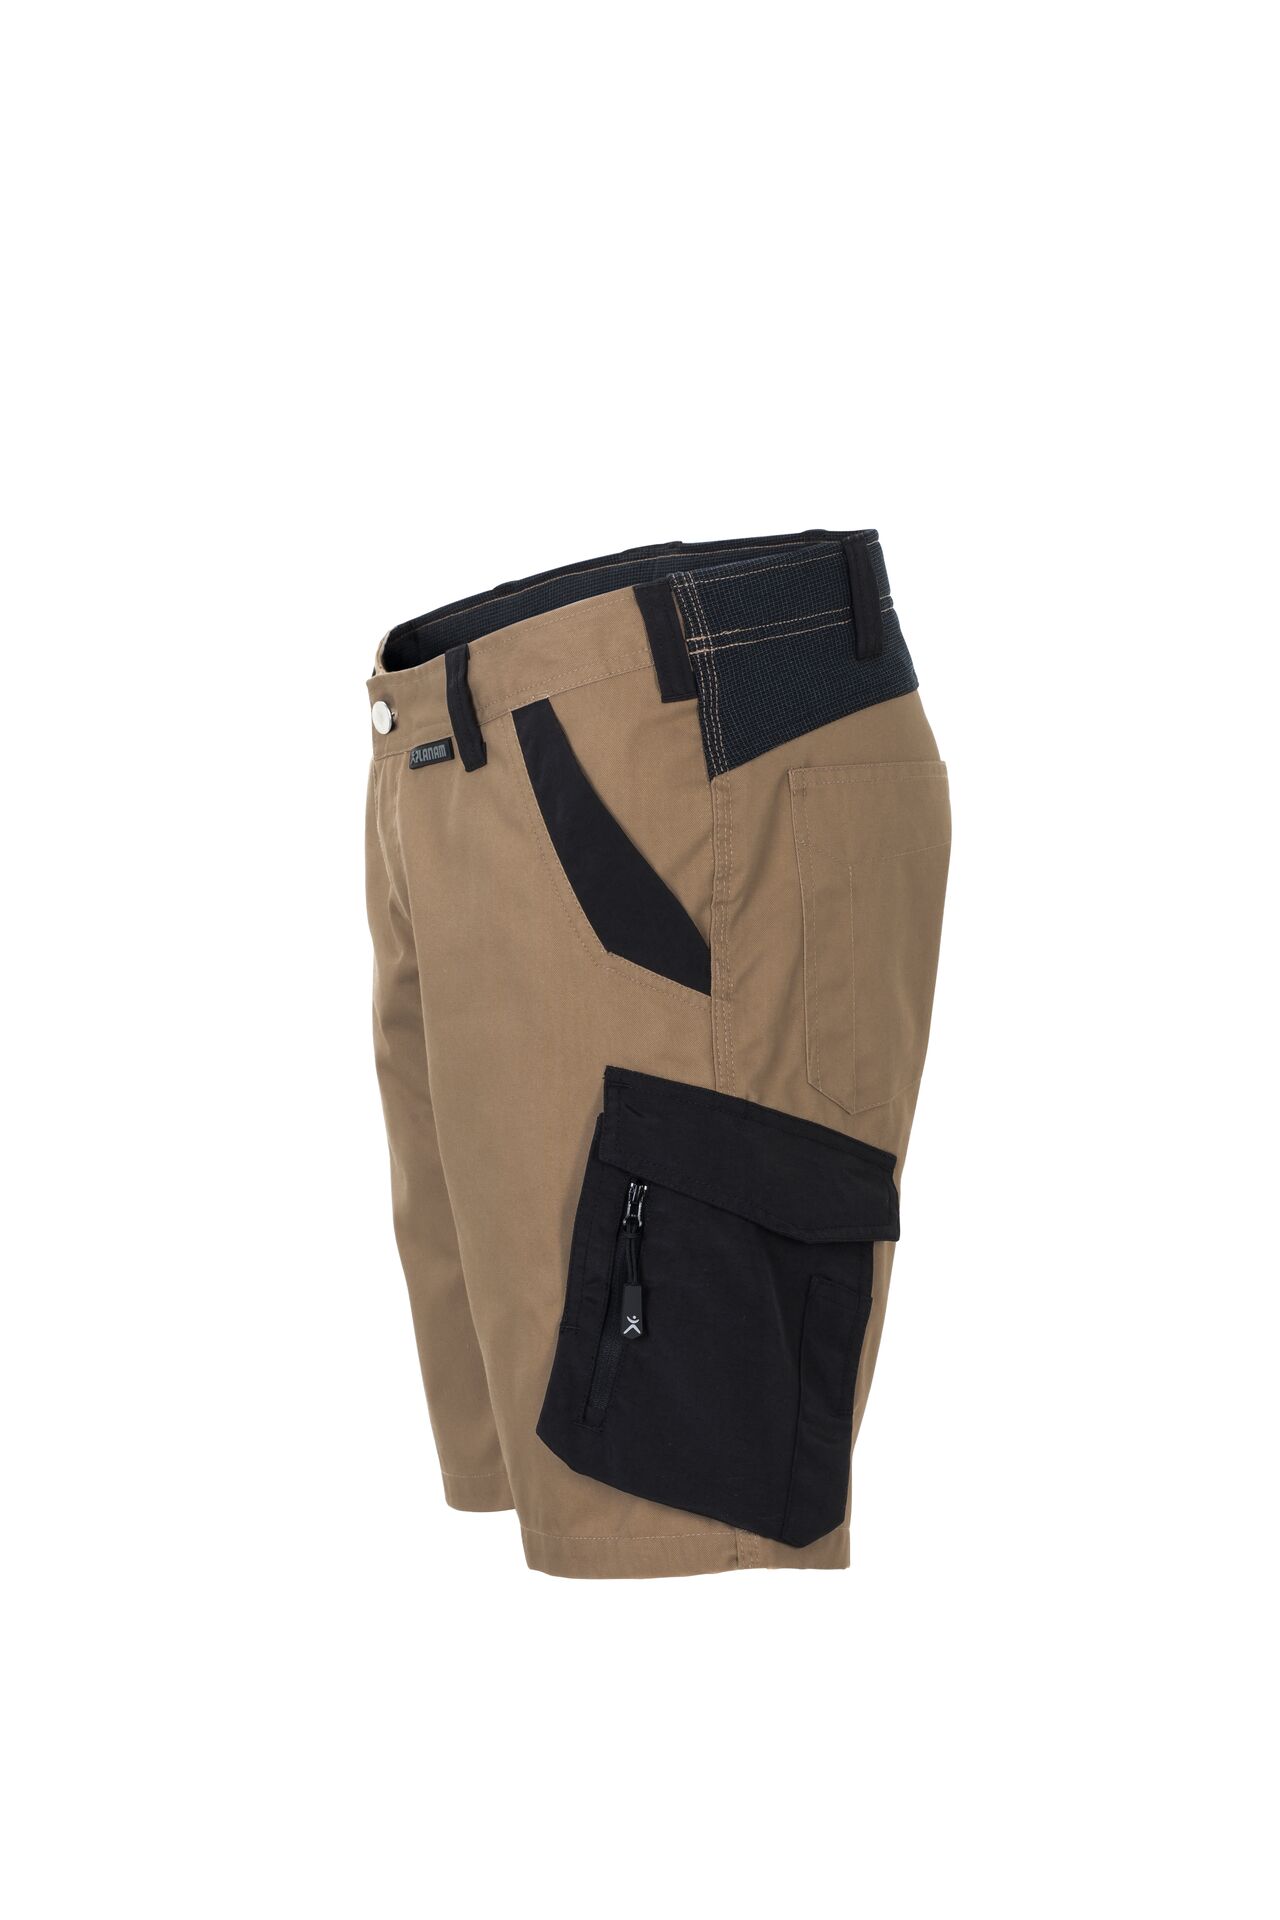 Planam® - Norit - Damen Shorts